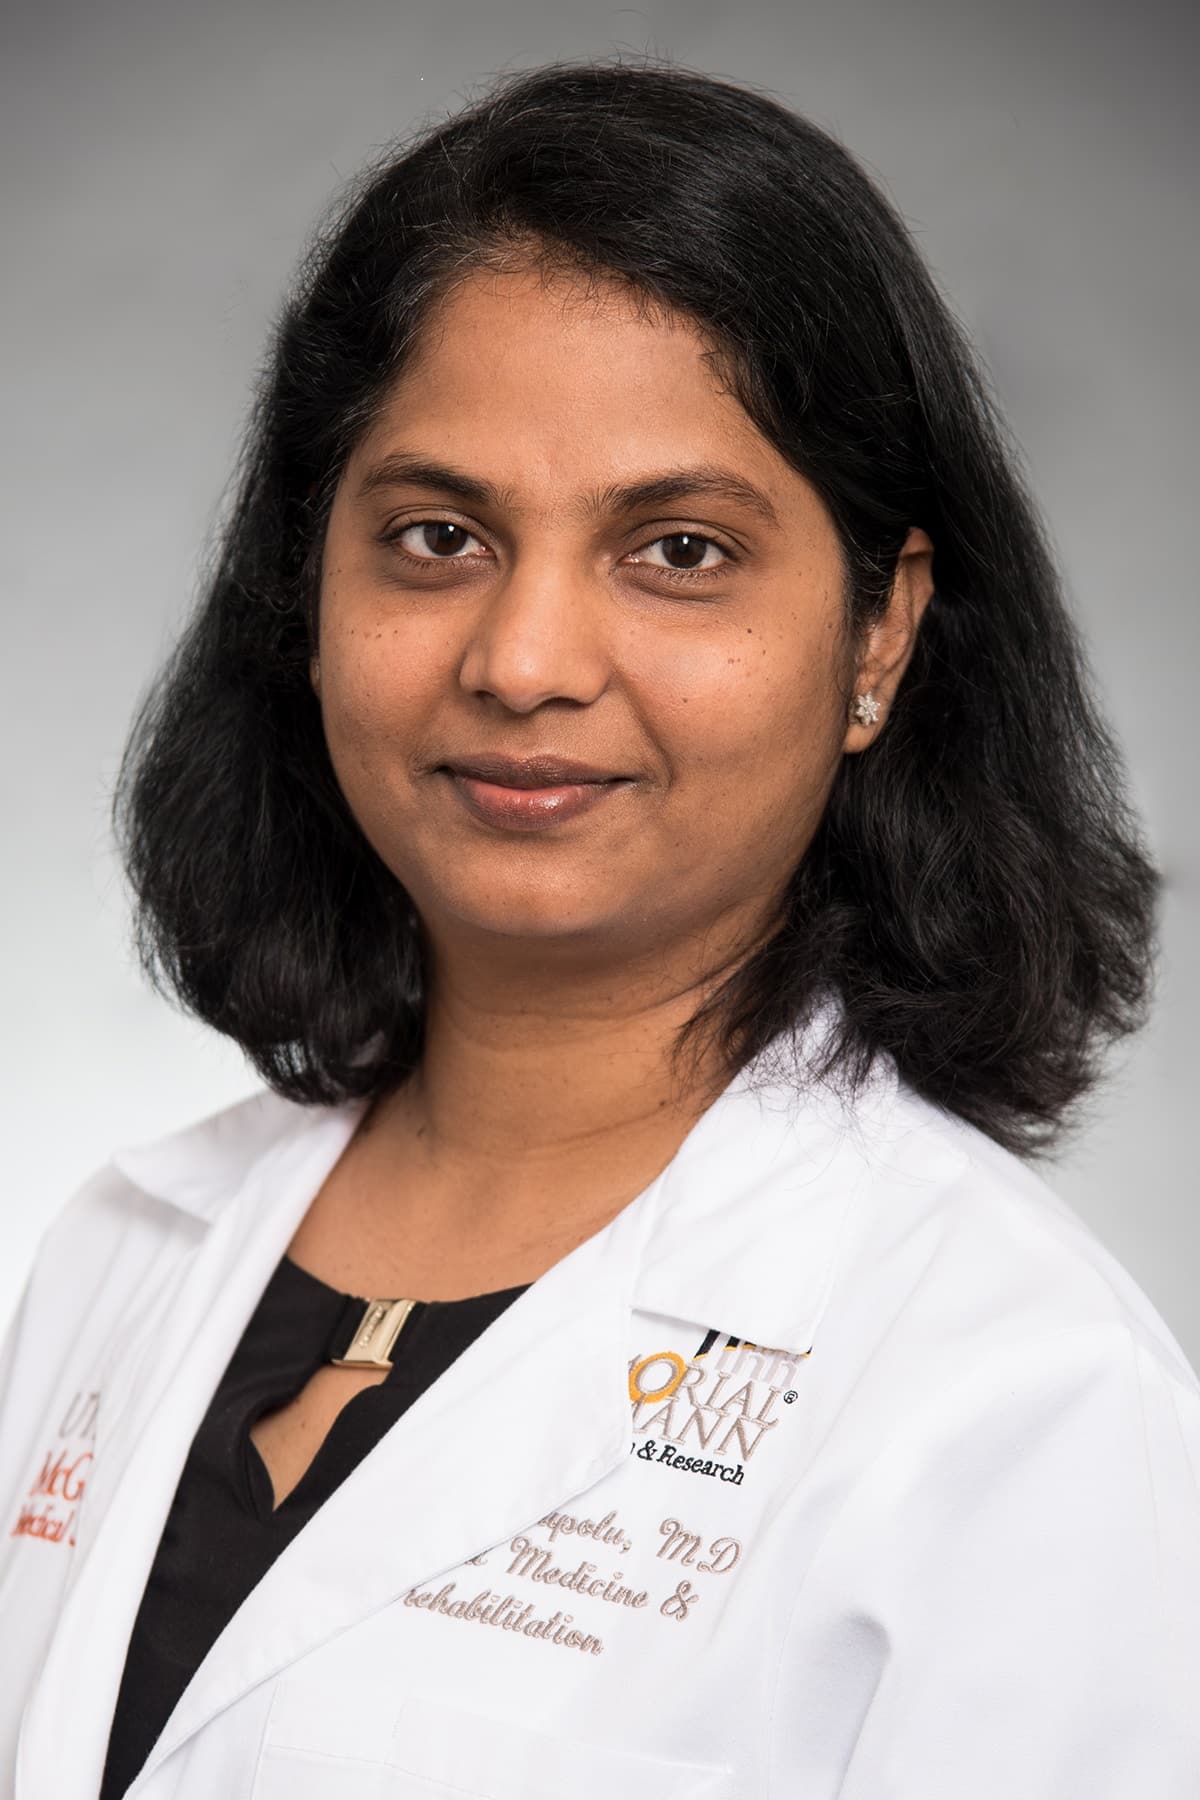 Radha Korupolu Doctor in Houston, Texas